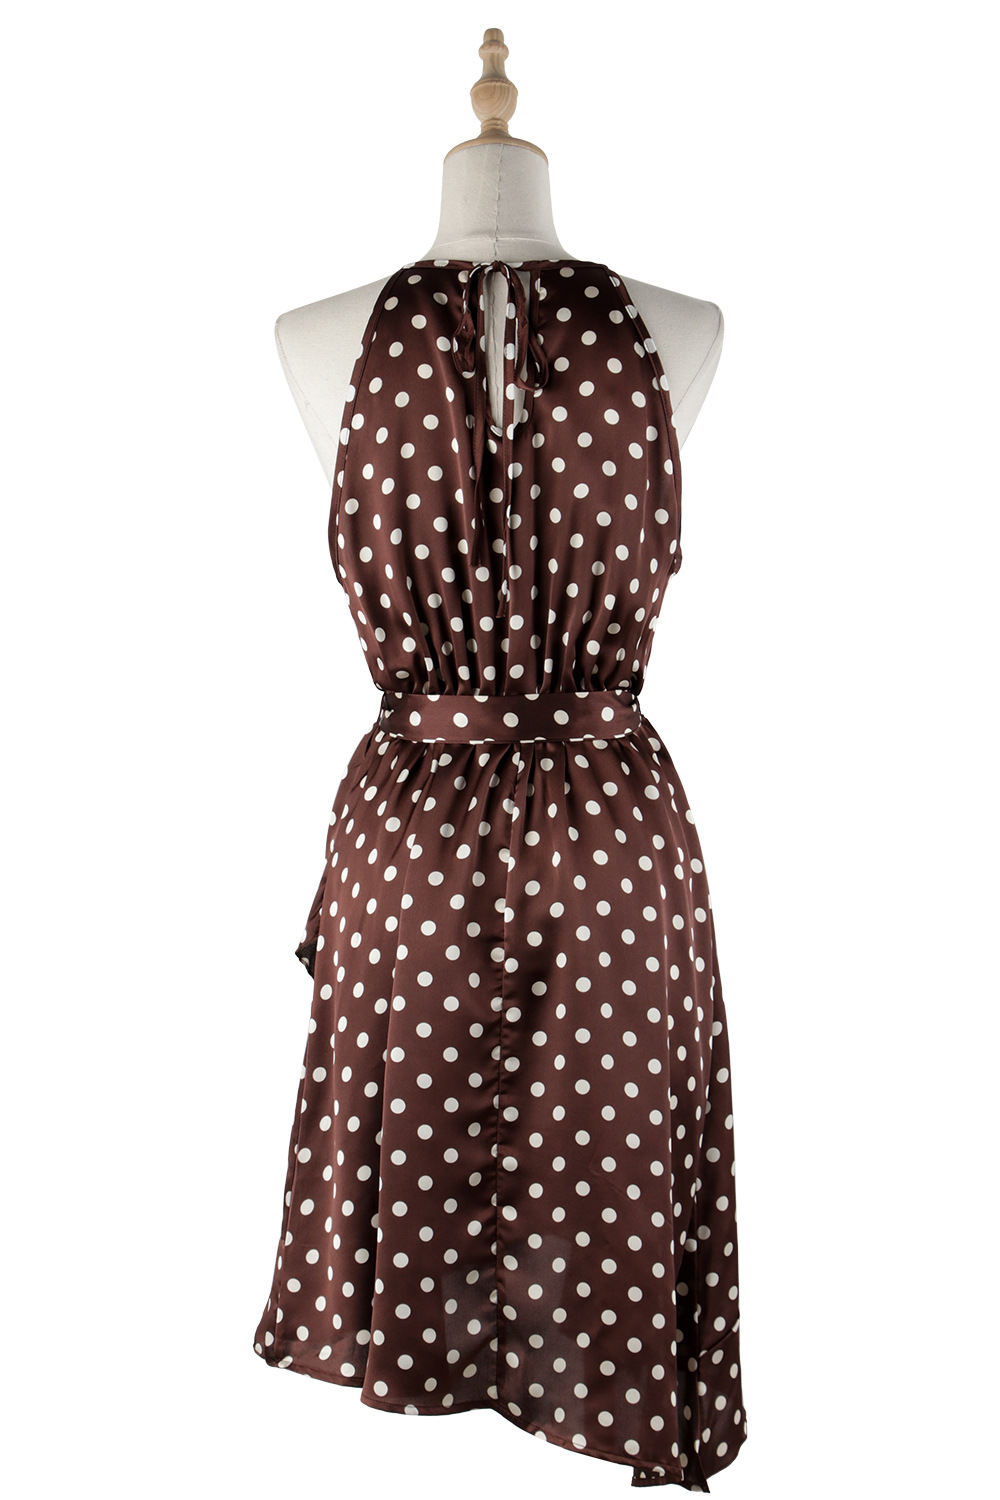 Polka dot sling European style pinched waist dress